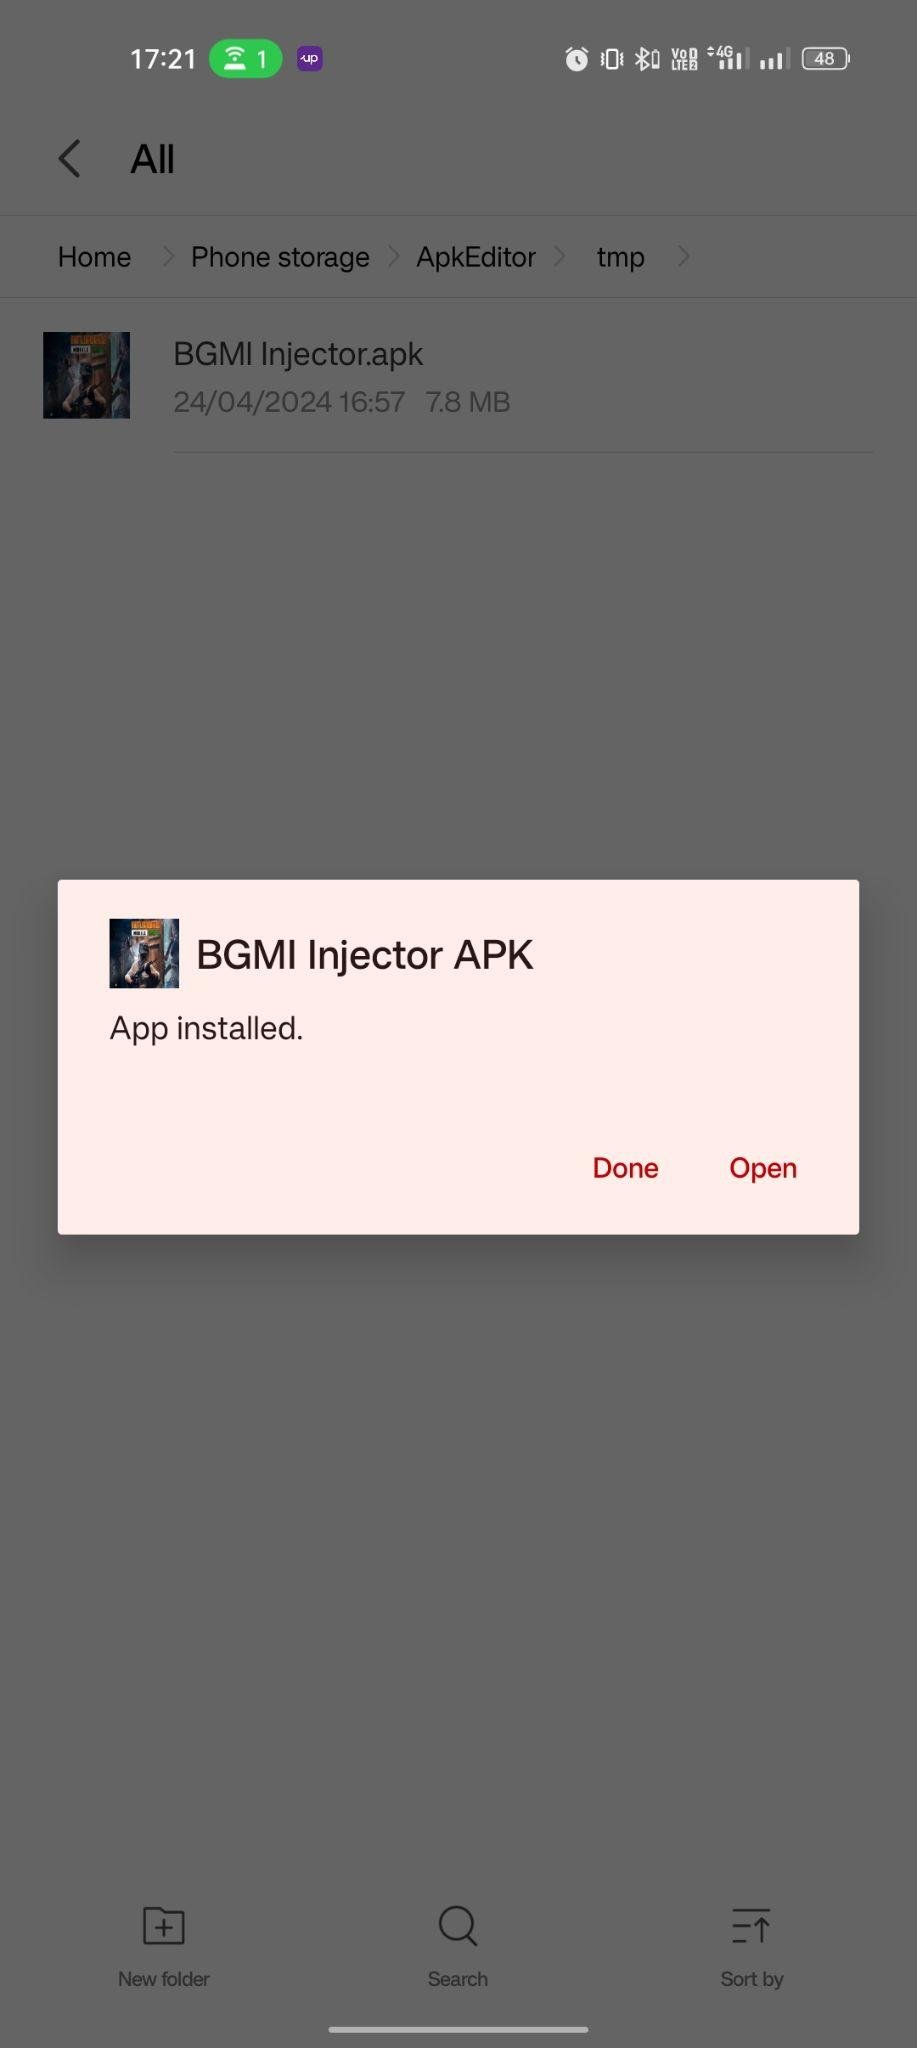 BGMI Injector apk installed